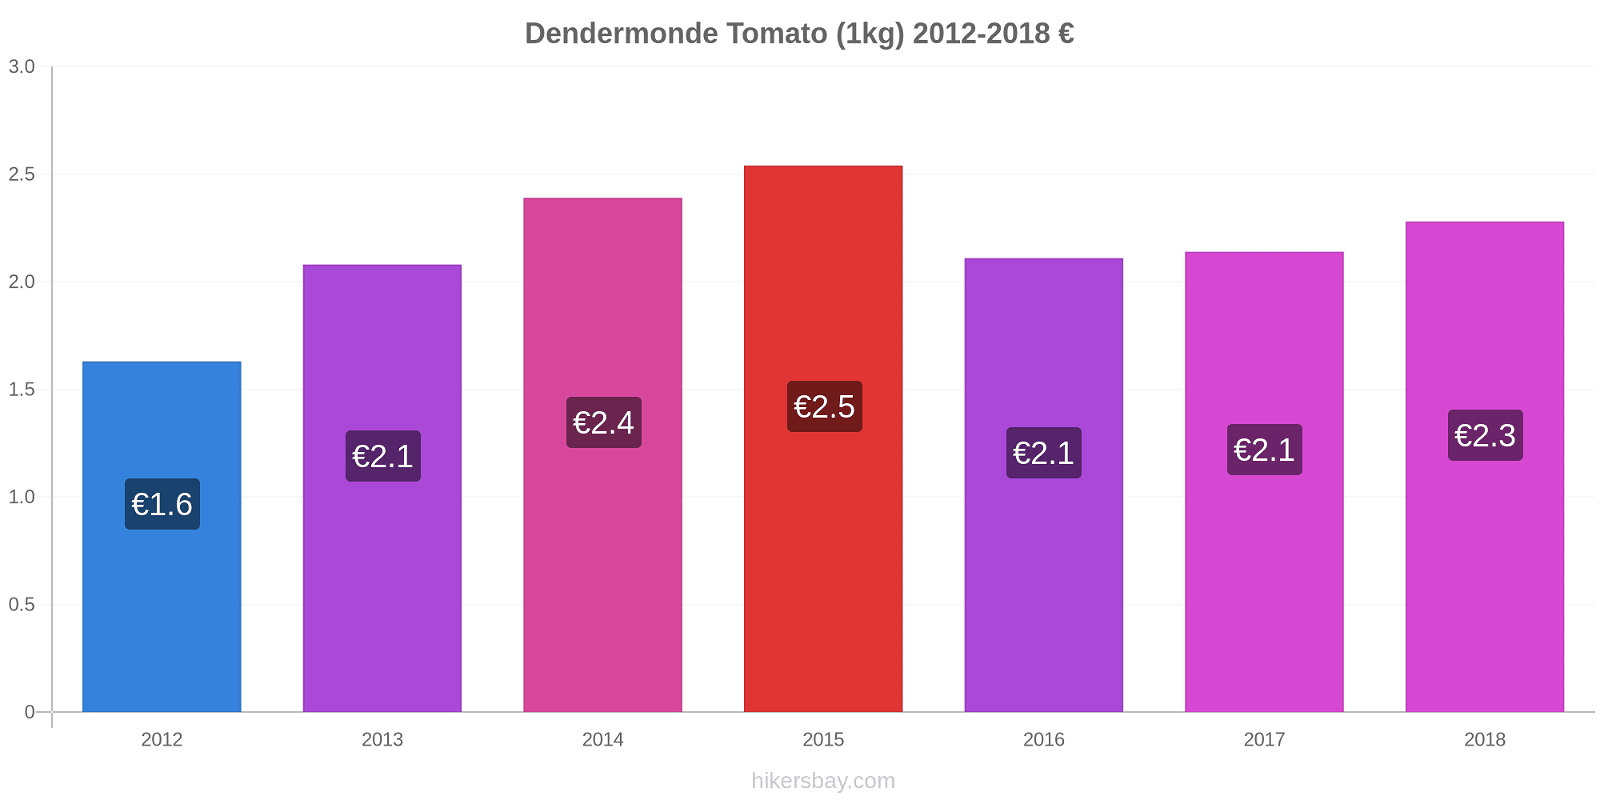 Dendermonde price changes Tomato (1kg) hikersbay.com